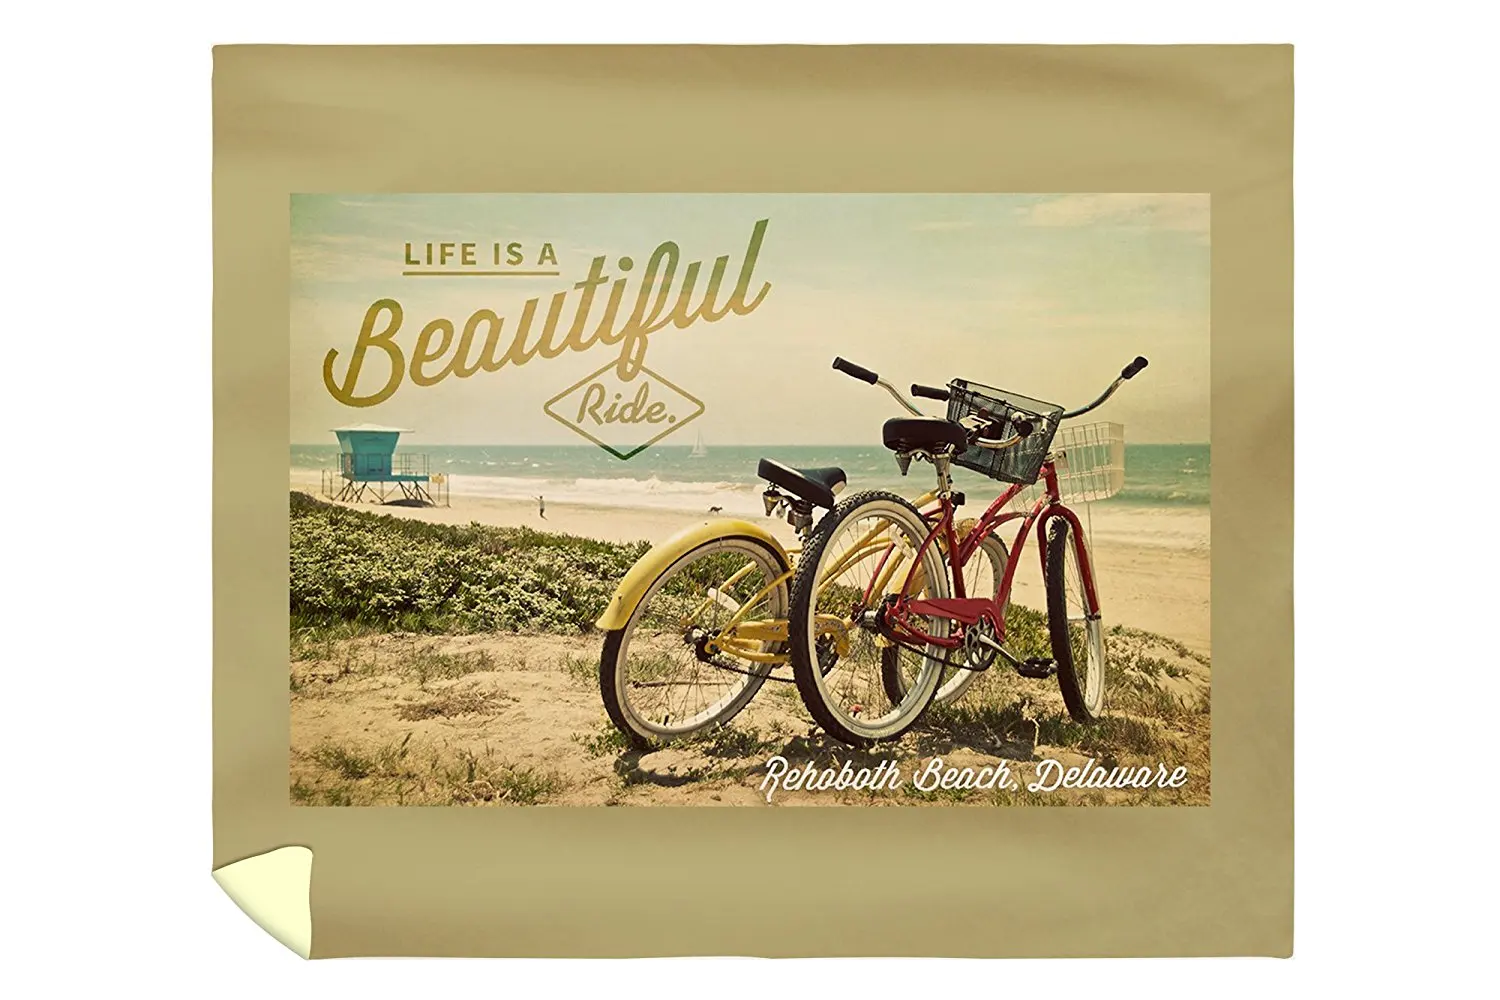 Life is ride. Велосипед Калифорния. JDM велосипед. Life is a beautiful Ride. Life is a beautiful Ride Кружка.